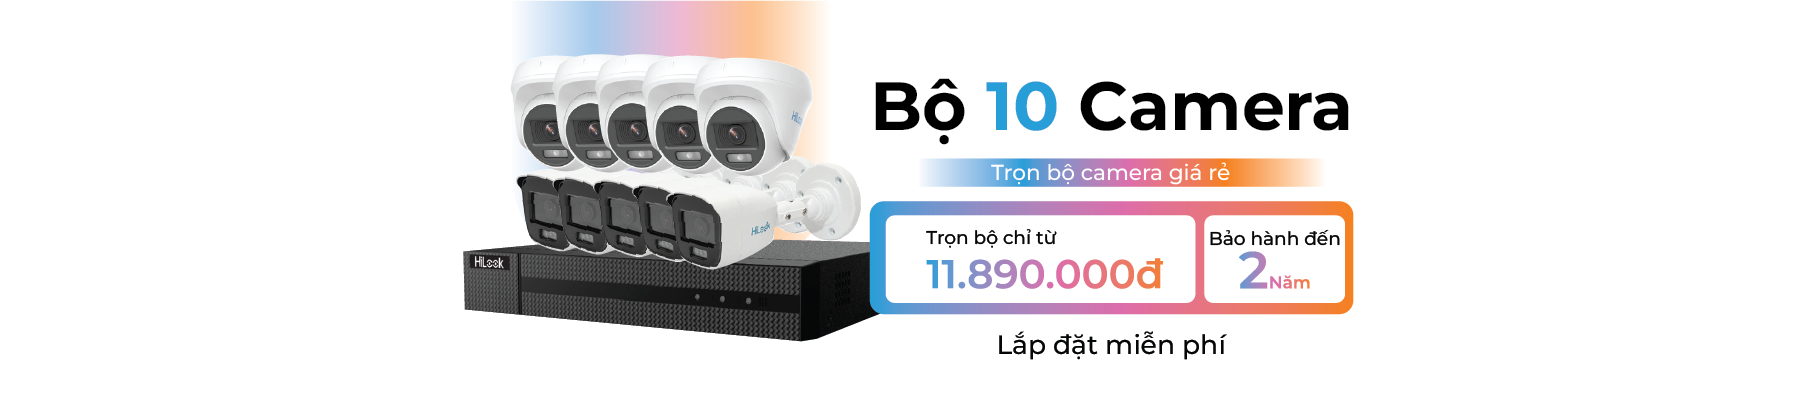 tron-bo-10-camera